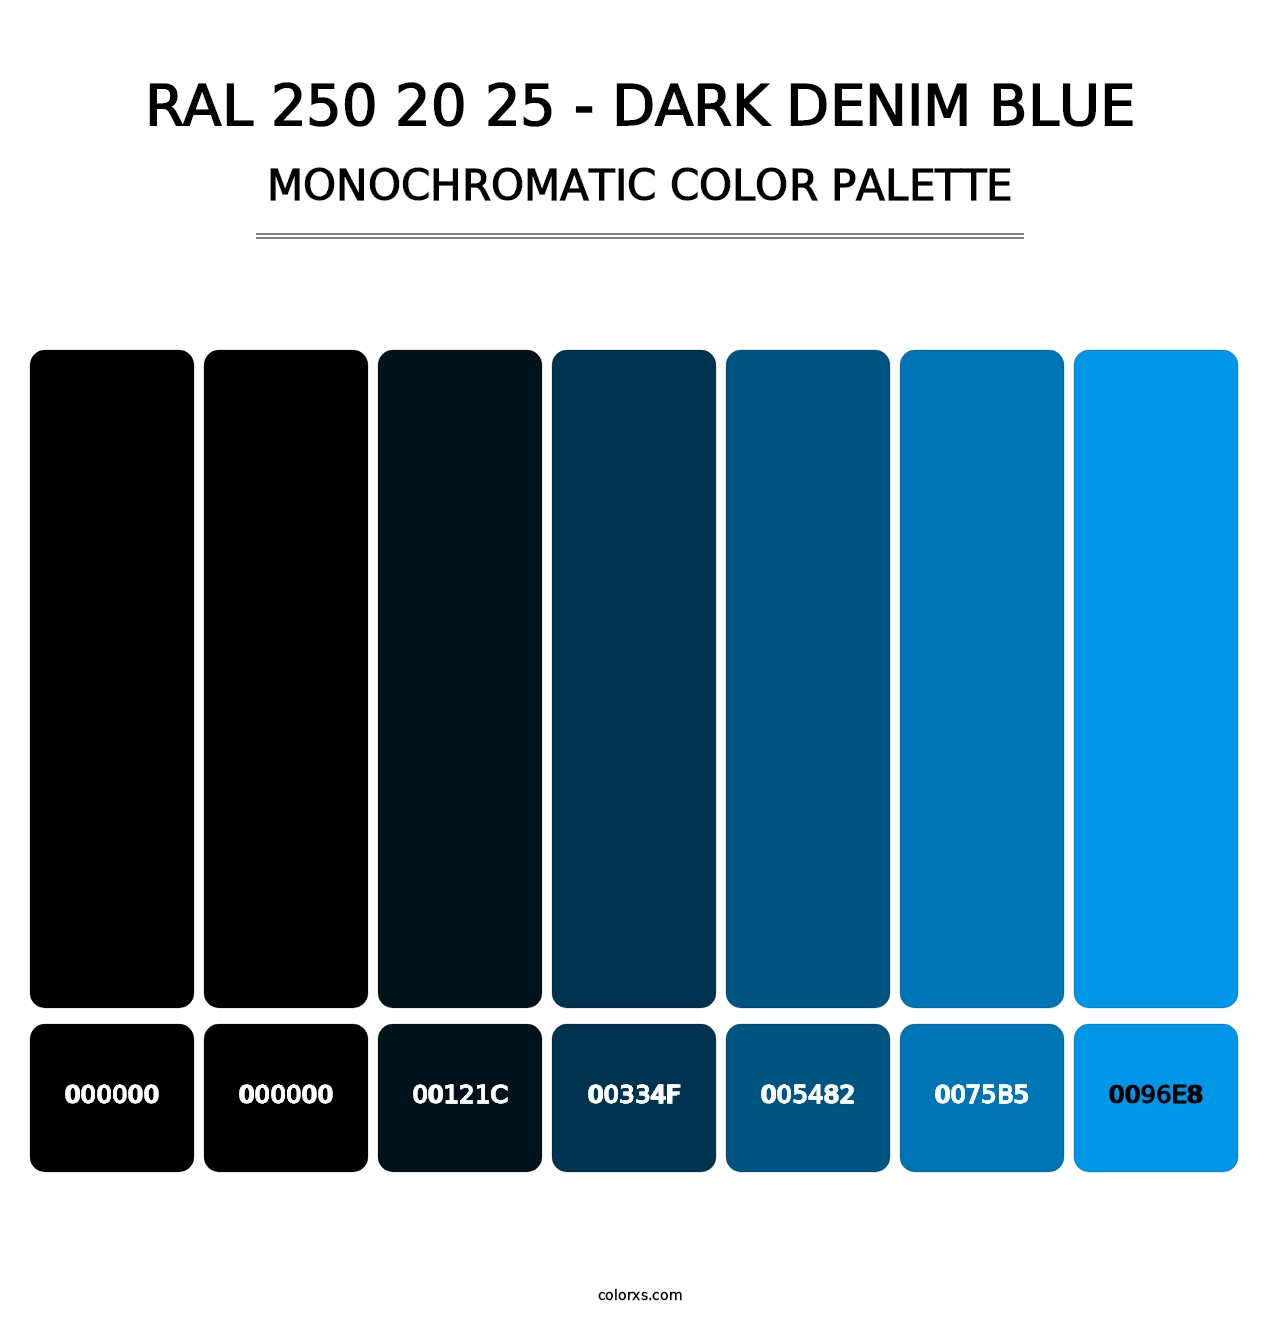 RAL 250 20 25 - Dark Denim Blue - Monochromatic Color Palette